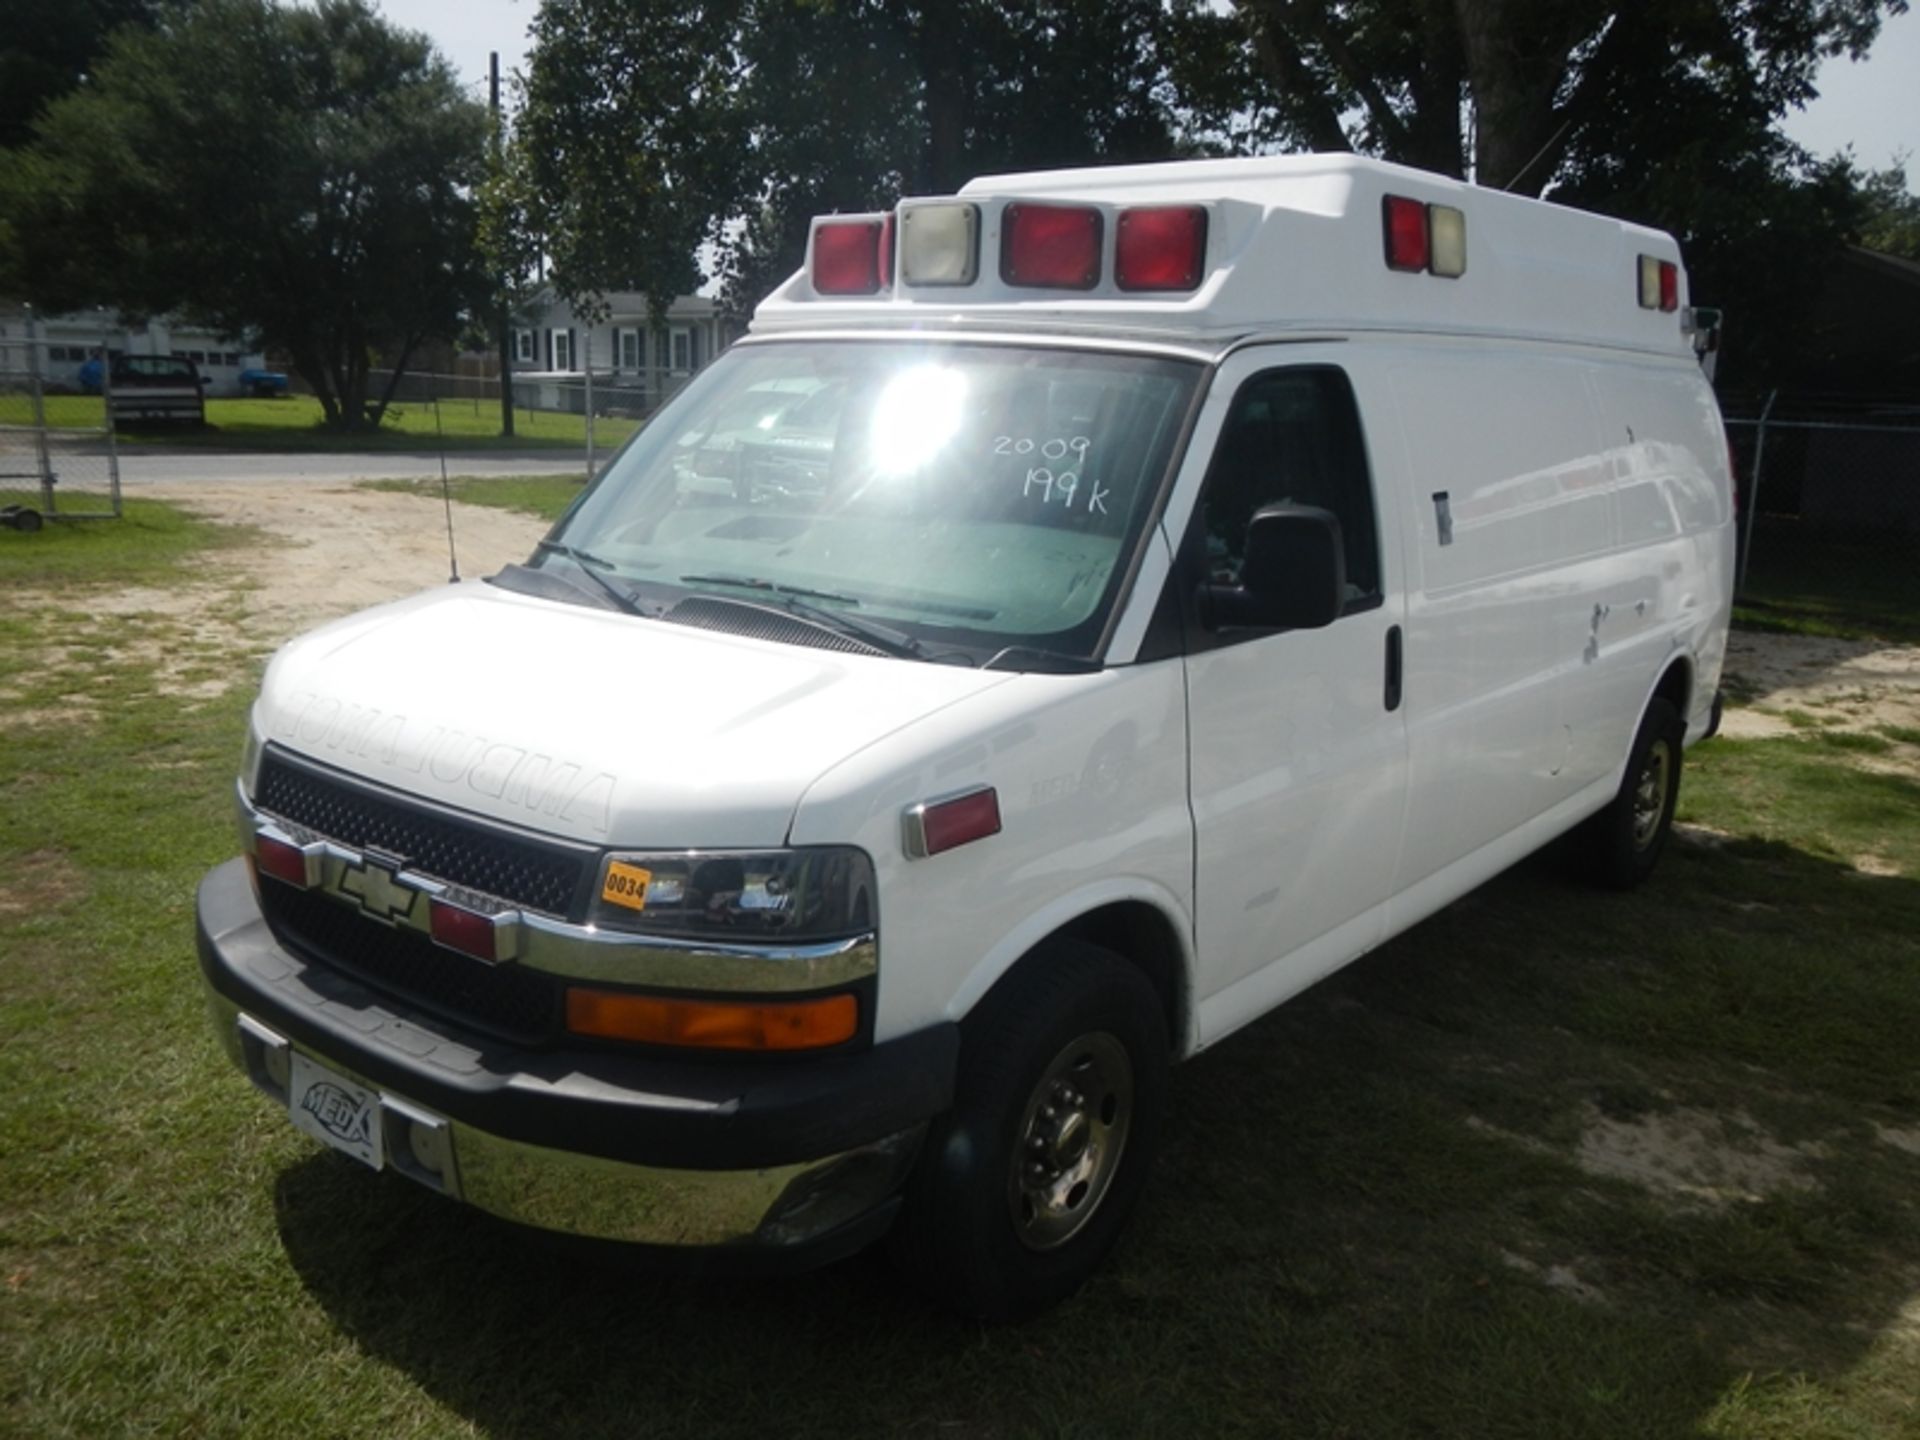 2009 CHEVROLET G-3500 Type II Ambulance dsl 199,883 miles - 1GBHG396391152924